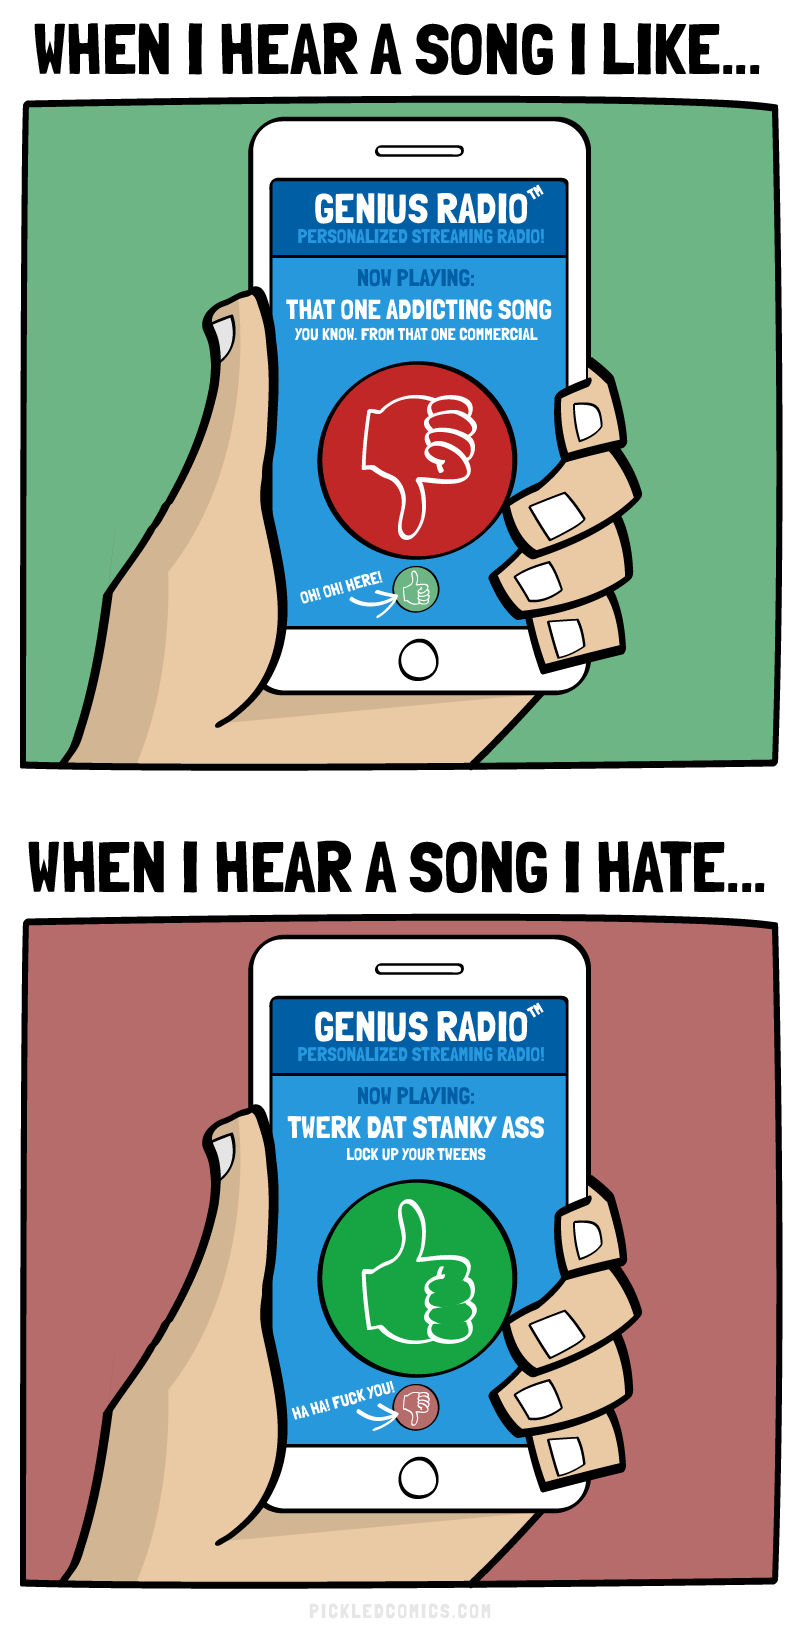 Genius Radio. Personalized Streaming Radio!